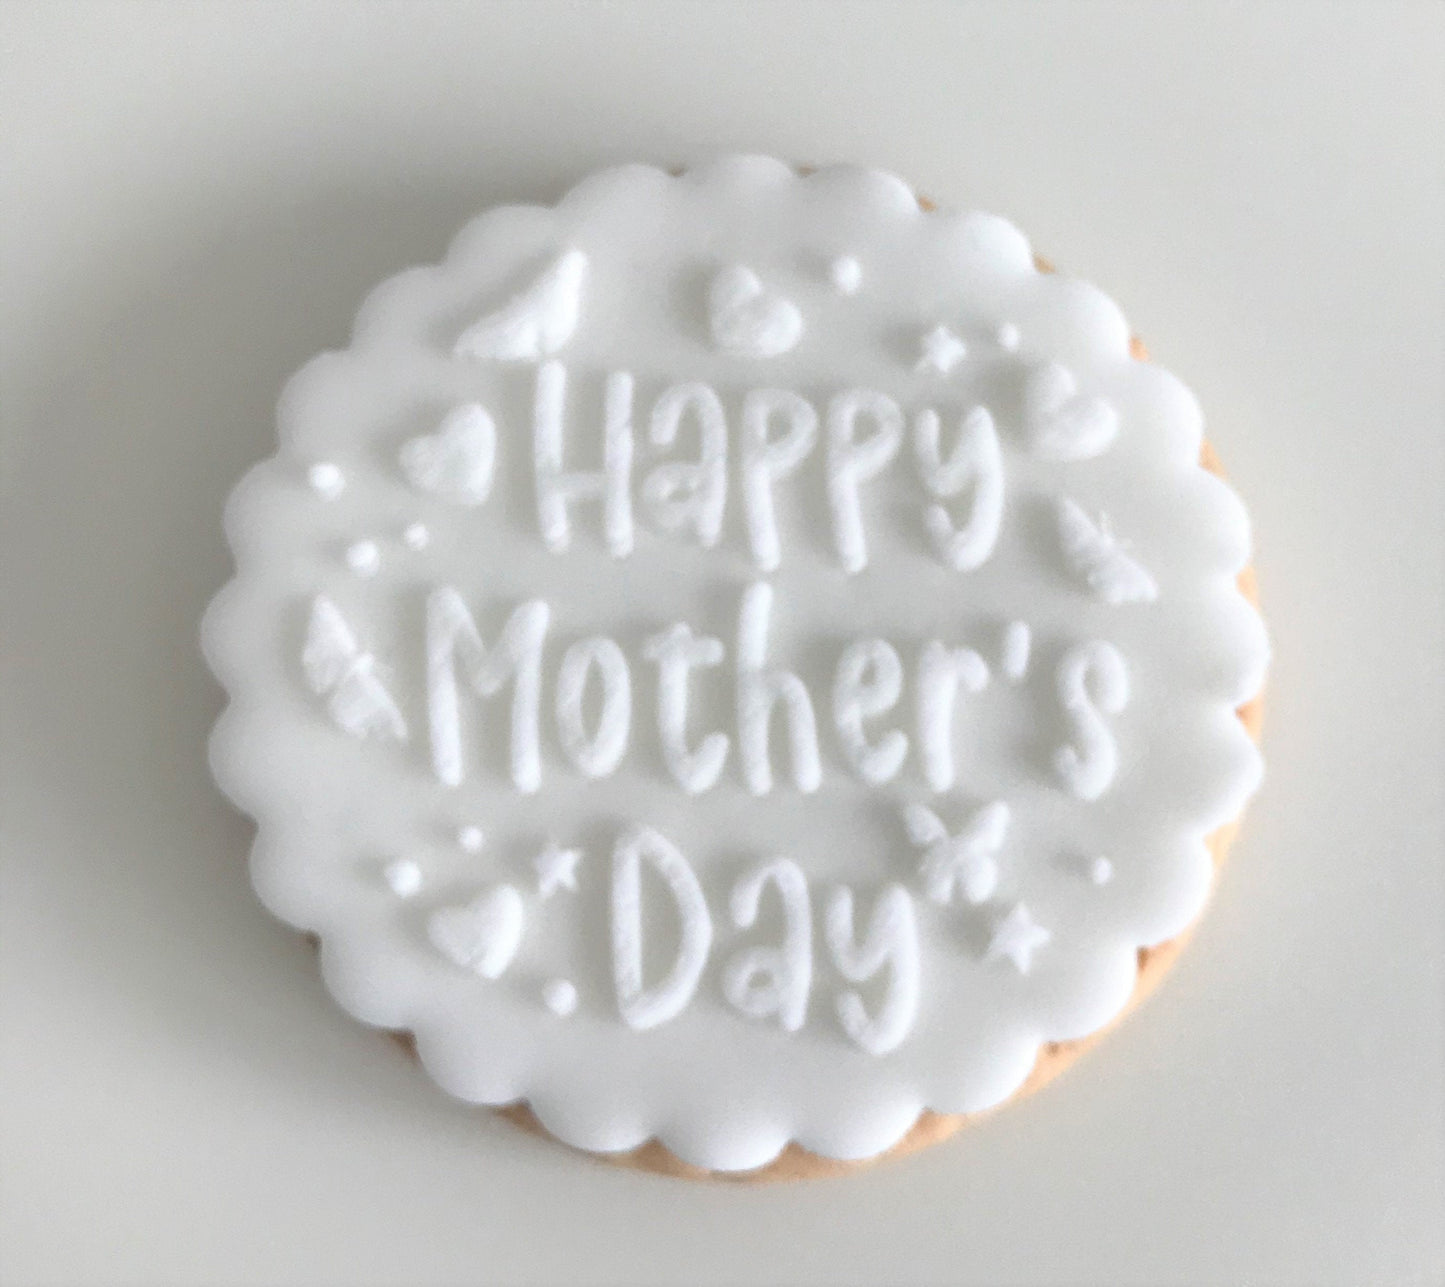 Happy Mother's Day Embosser. BARGAIN STORE